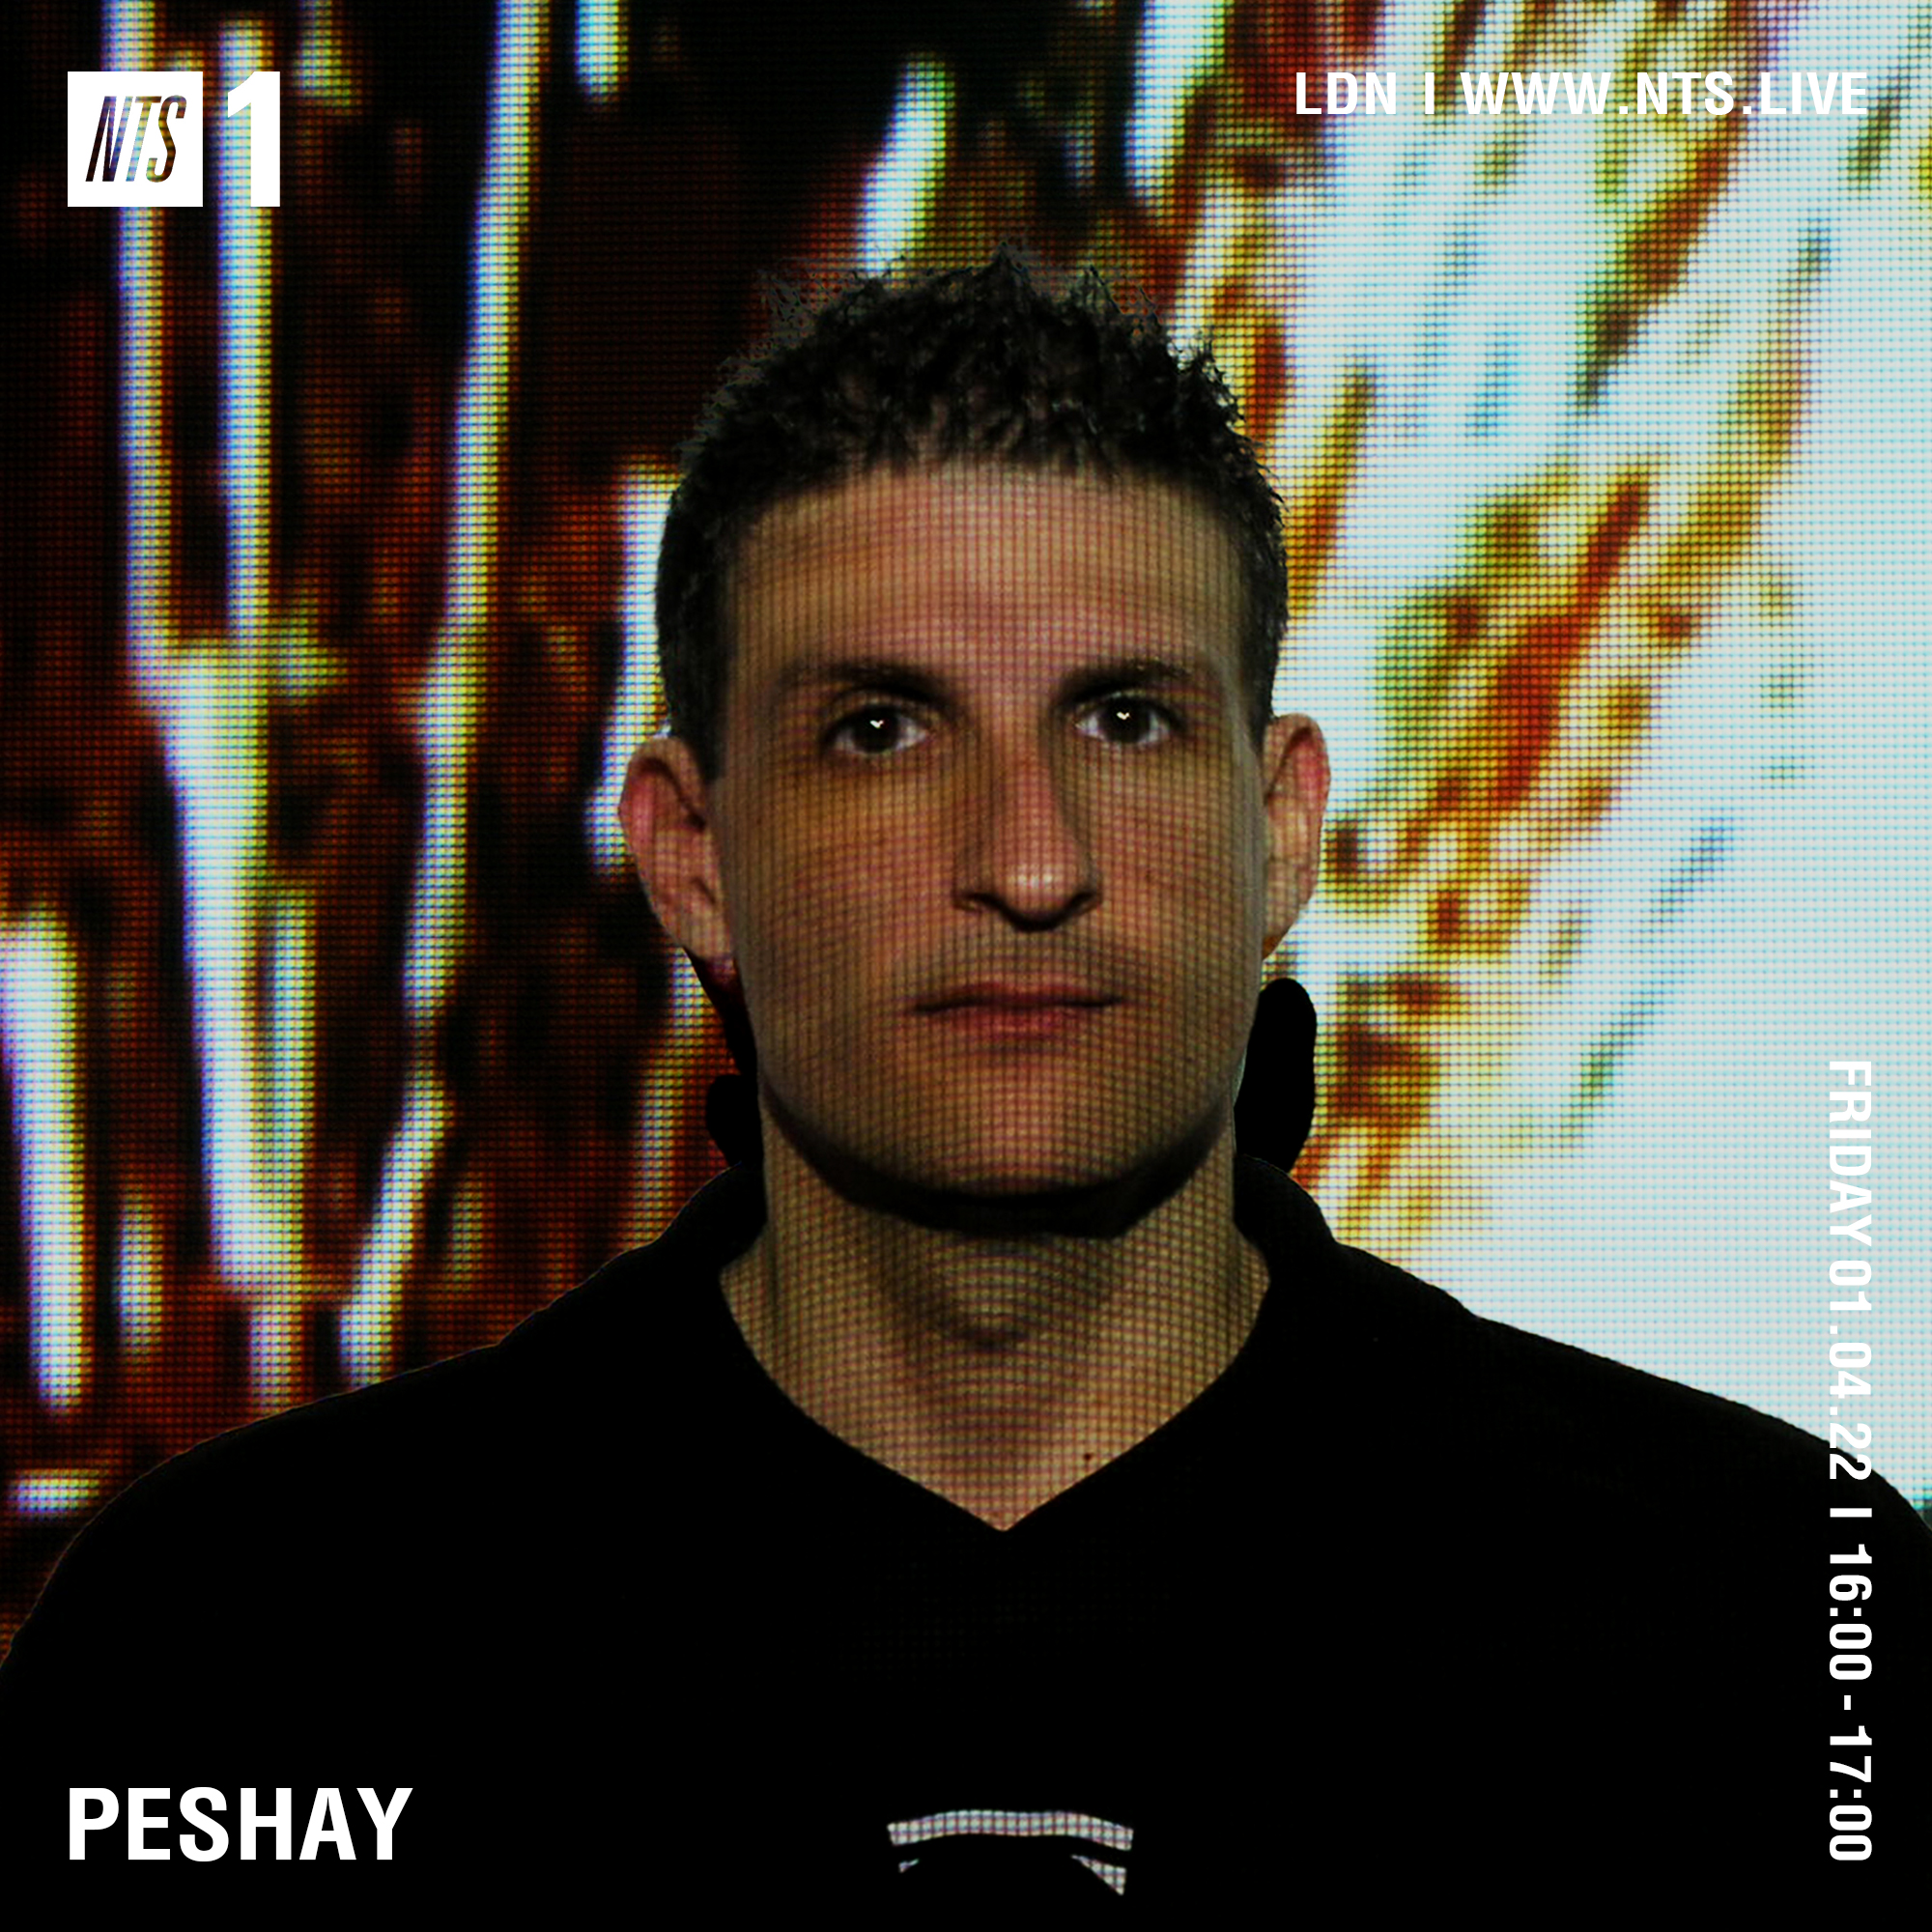 Peshay will be live on NTS Radio 01 April 2022